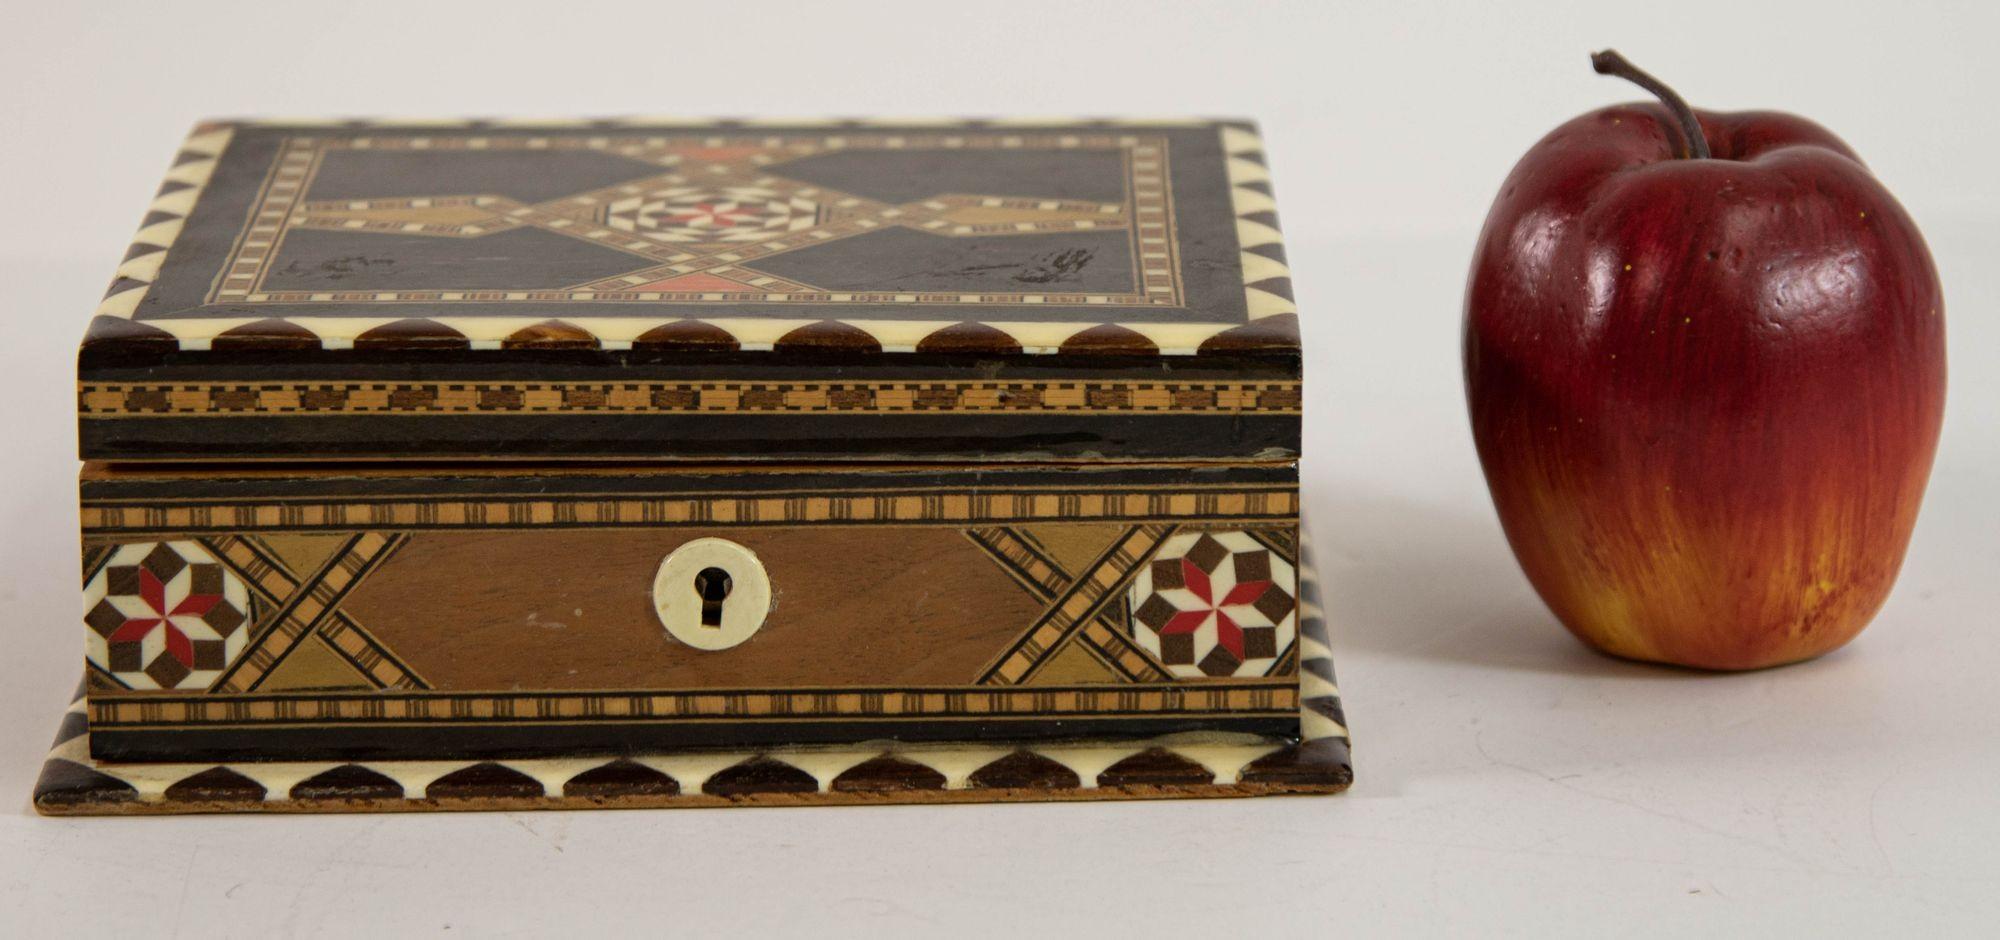 1940s Marquetry Mosaic Wood Box Moorish Islamic Art Granada Spain Khatam Decor.
Moorish Inlaid Marquetry Jewelry Box Spain.
Dimensions Height: 2.5 in. Width: 7 in. Depth: 5.5 in.
Handcrafted in Granada Spain, circa 1940s 1950s.
Inlaid Marquetry